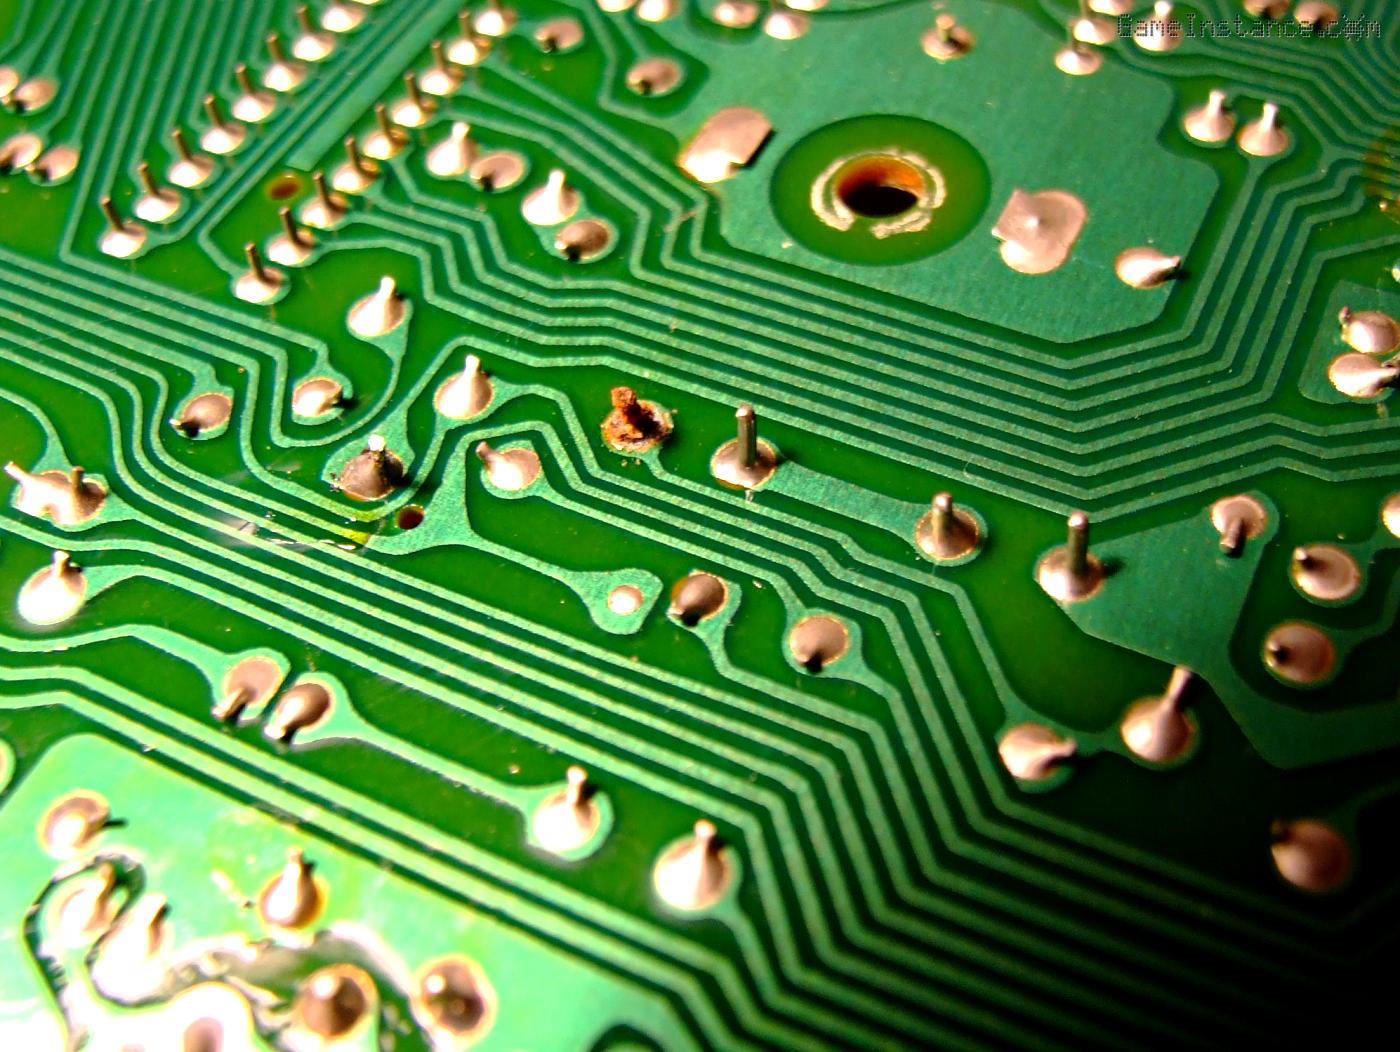 Technics ST-S707 - C907 super-capacitor etched pad